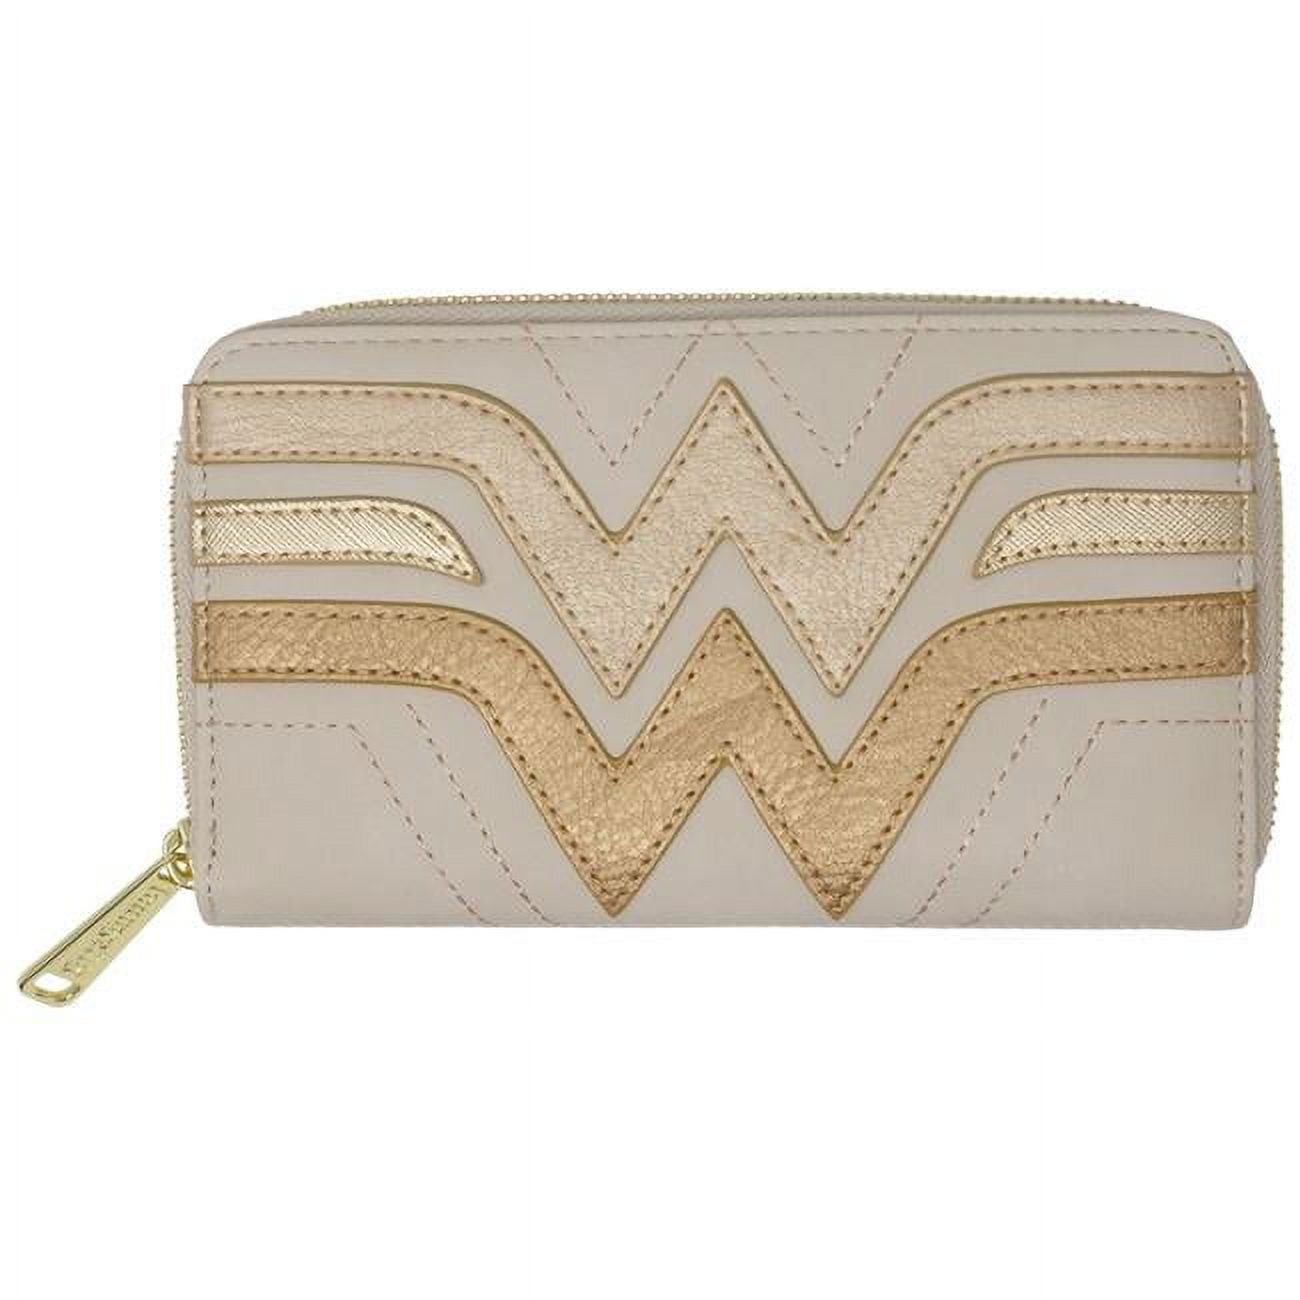 Wonder Woman 112707 Wonder Woman Golden Faux Leather Zip Around Wallet - image 1 of 1